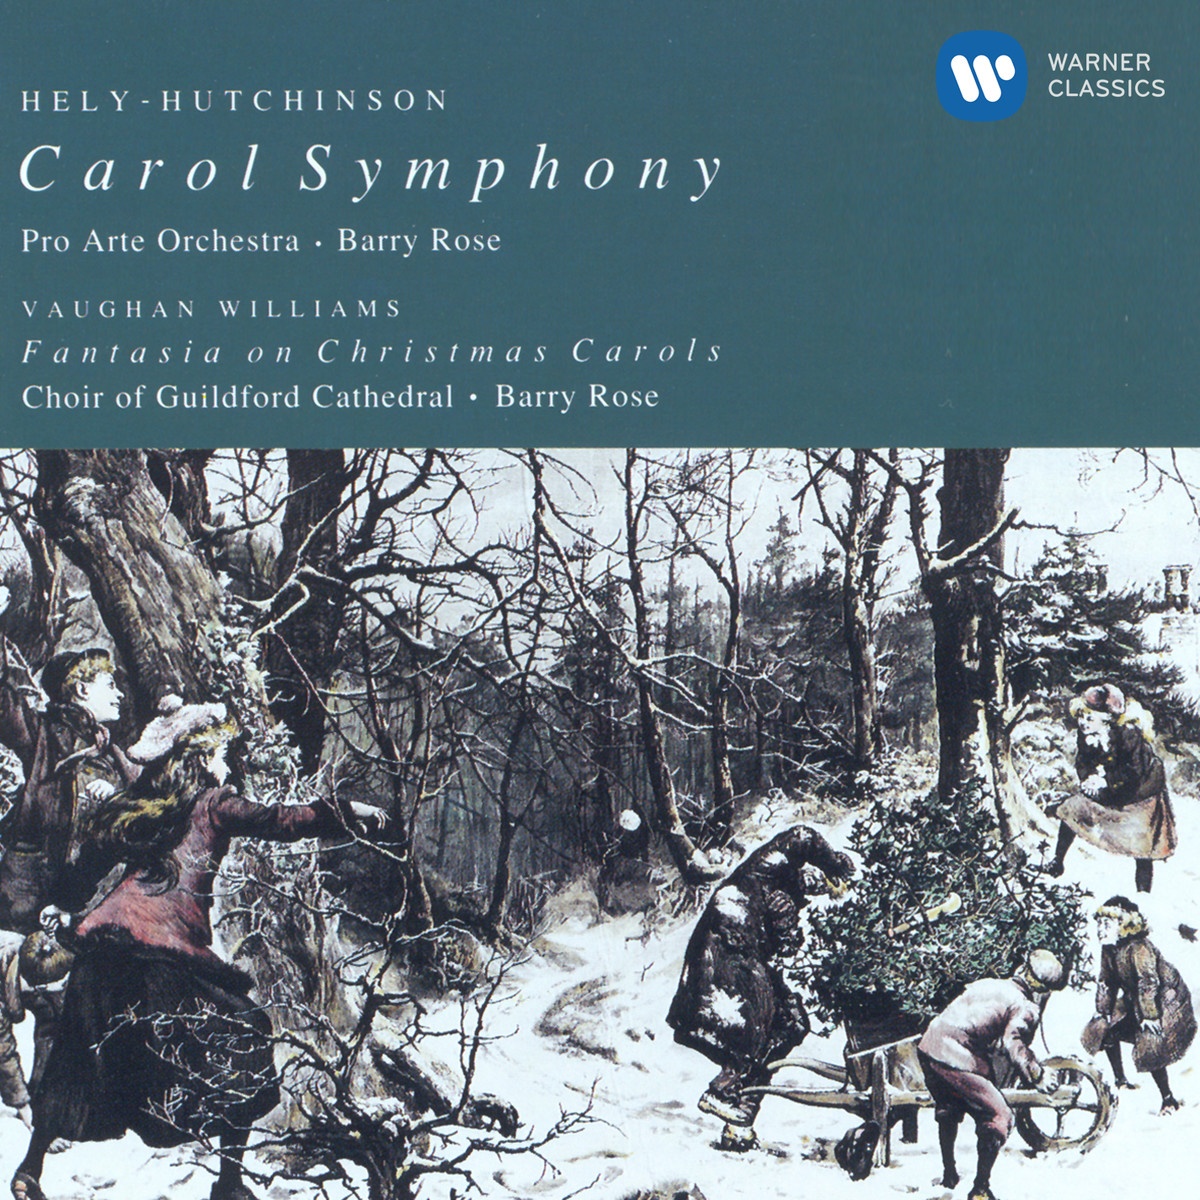 Carol Symphony (1991 Digital Remaster): Allegro energico -